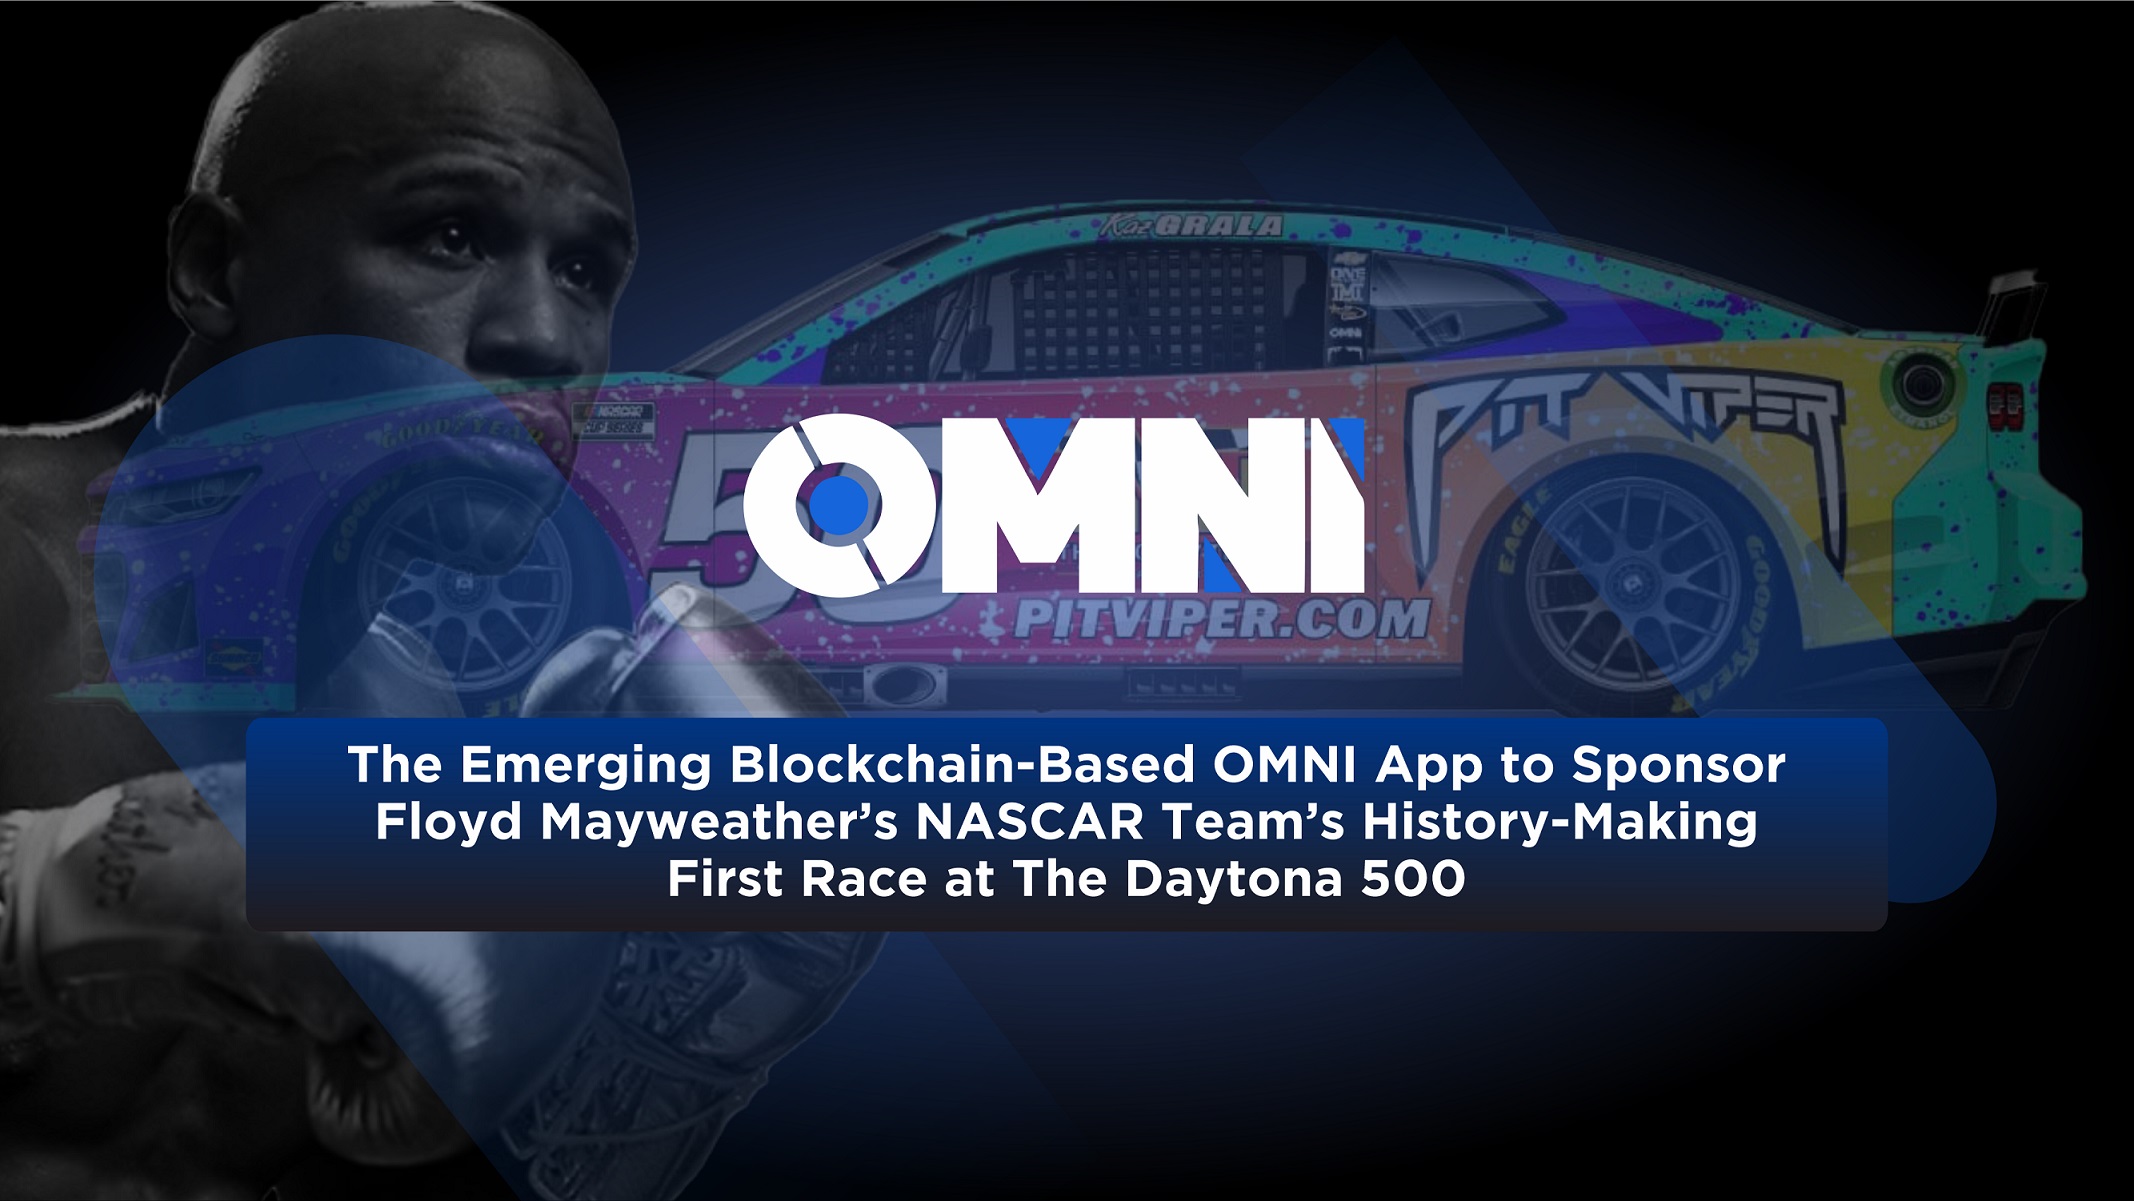 The Emerging Blockchain-Based OMNI App to Sponsor Floyd Mayweather’s NASCAR Team’s History-Making First Race at The Daytona 500